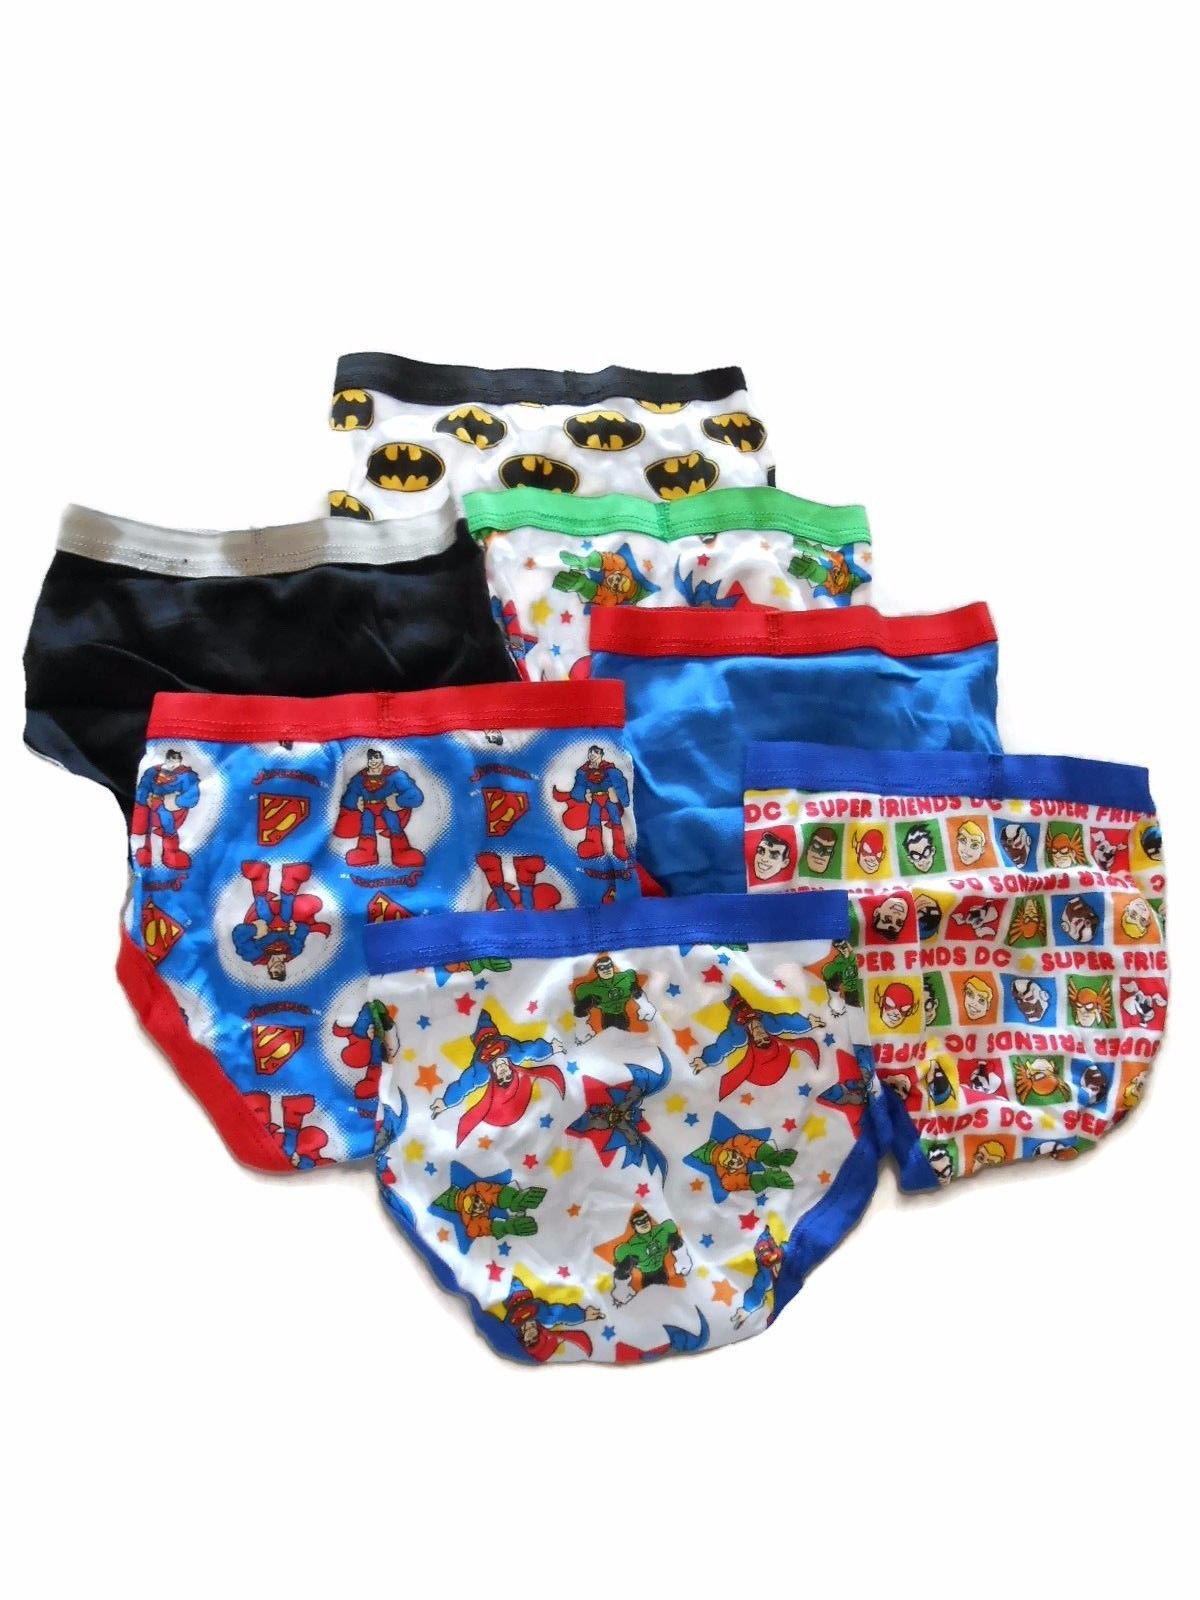 DC Superfriends Toddler Boys Underwear, 7-Pack - image 2 of 4